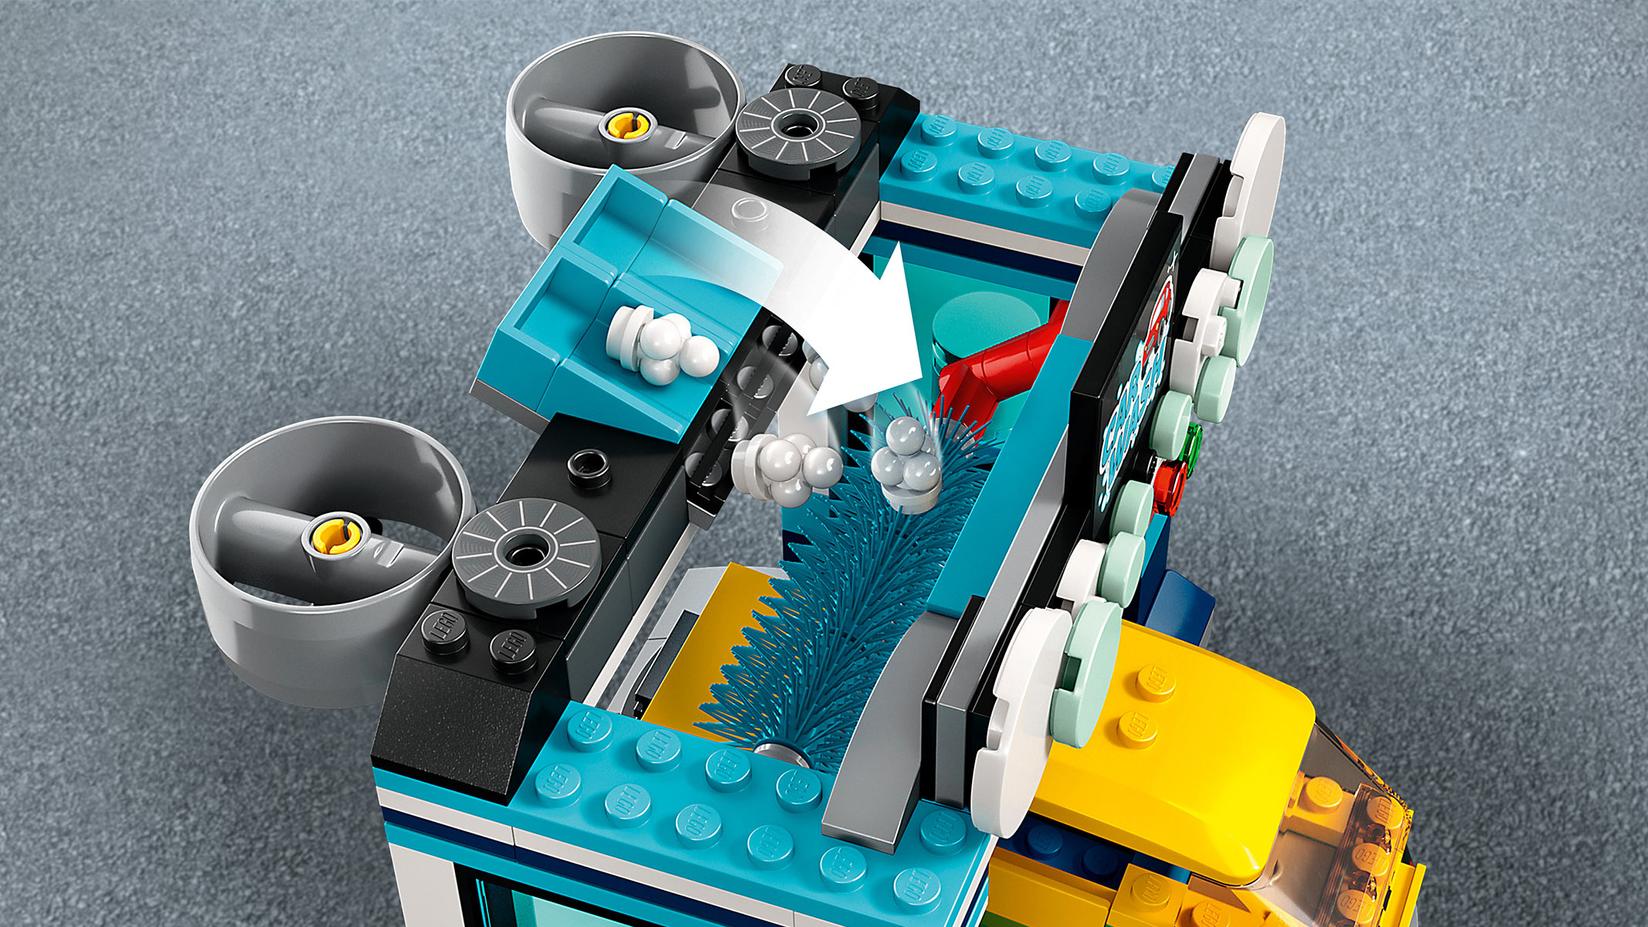 Selected image for LEGO Kocke Perionica automobila 60362